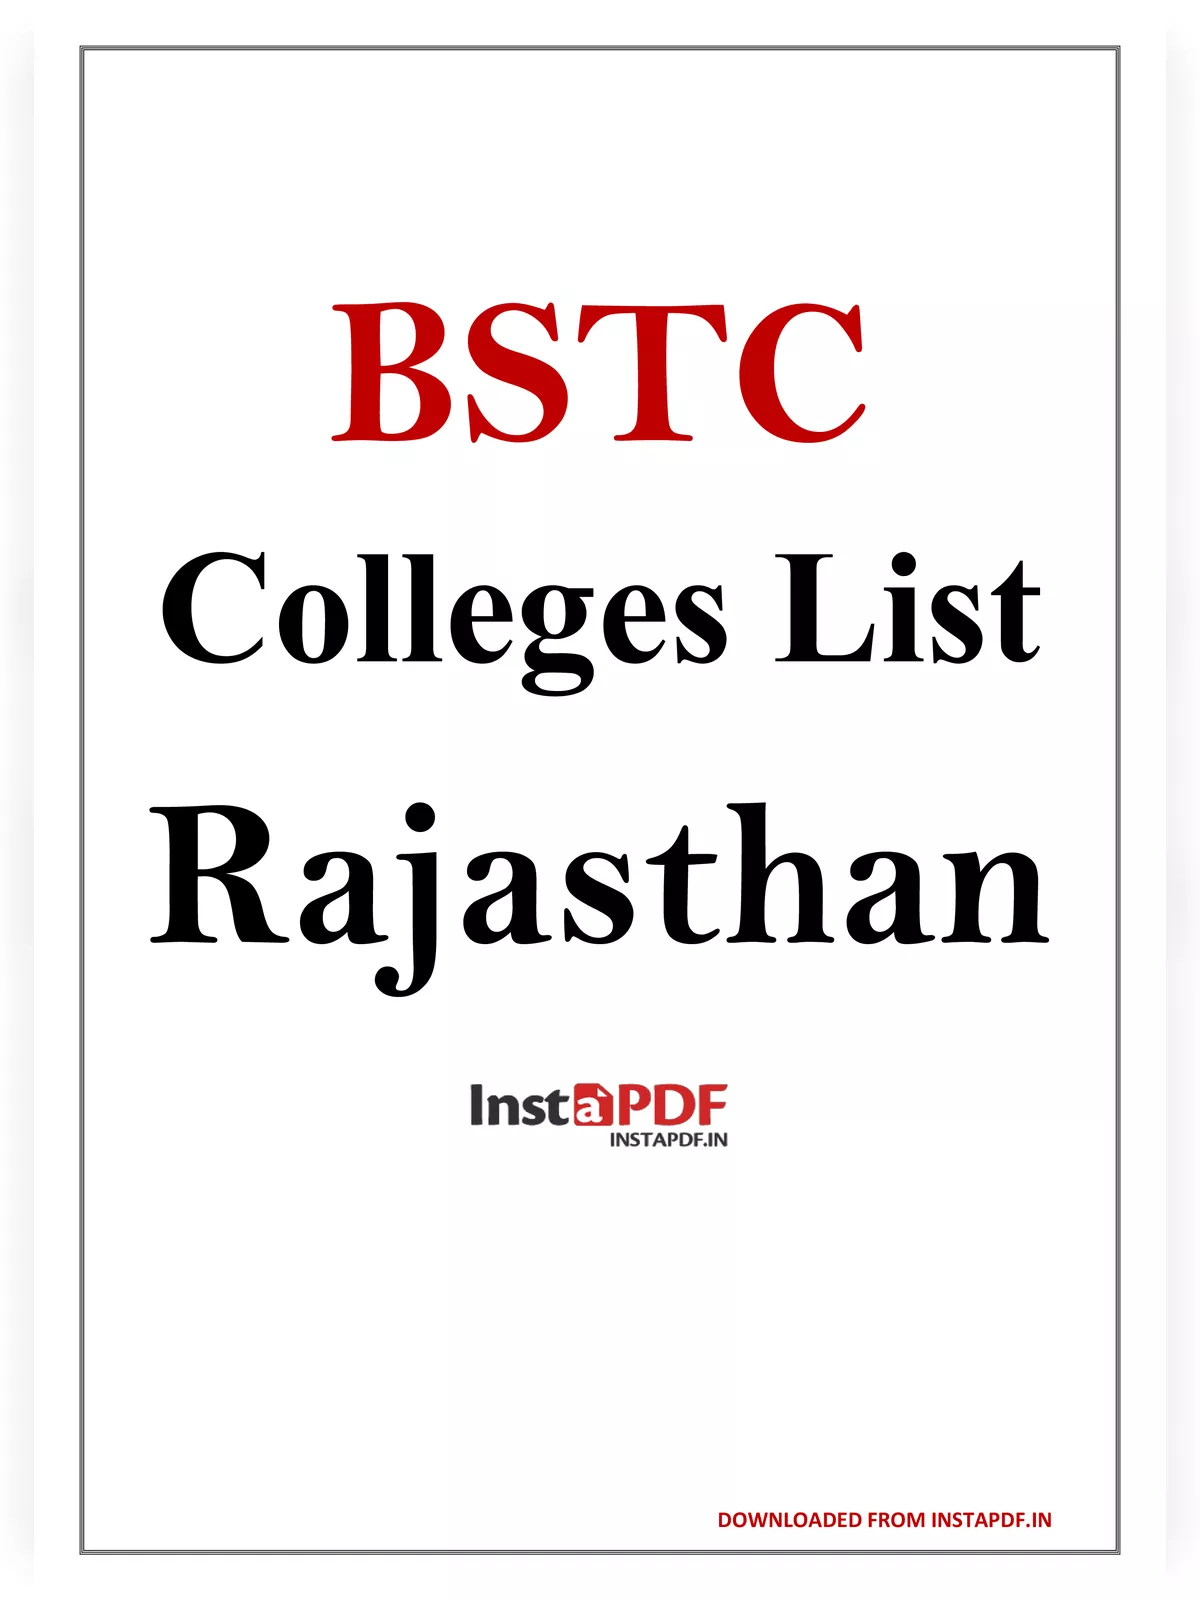 BSTC College List Rajasthan